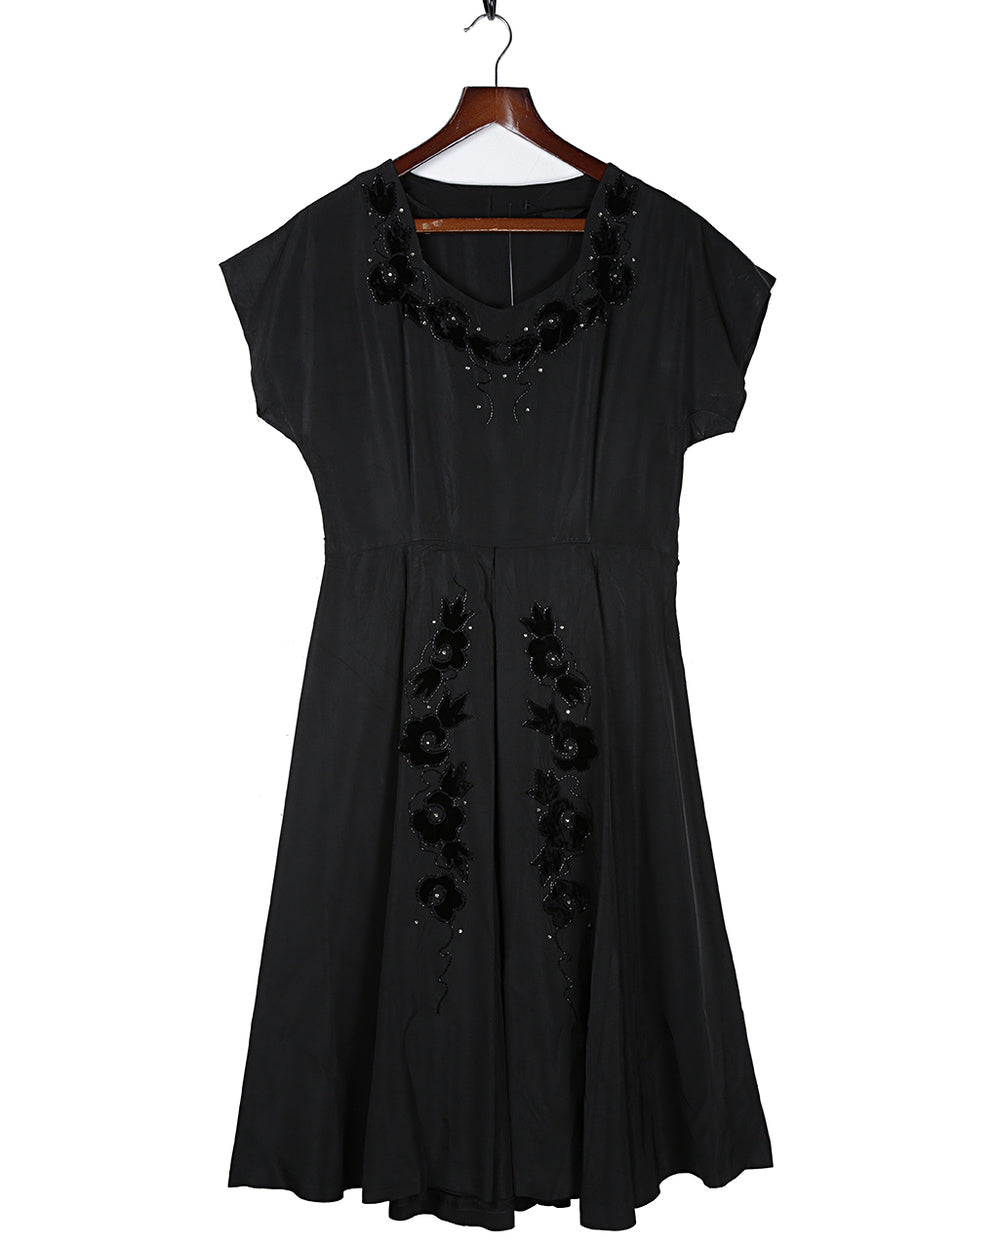 1950s Vintage Black Velvet Embroidered Dress - M